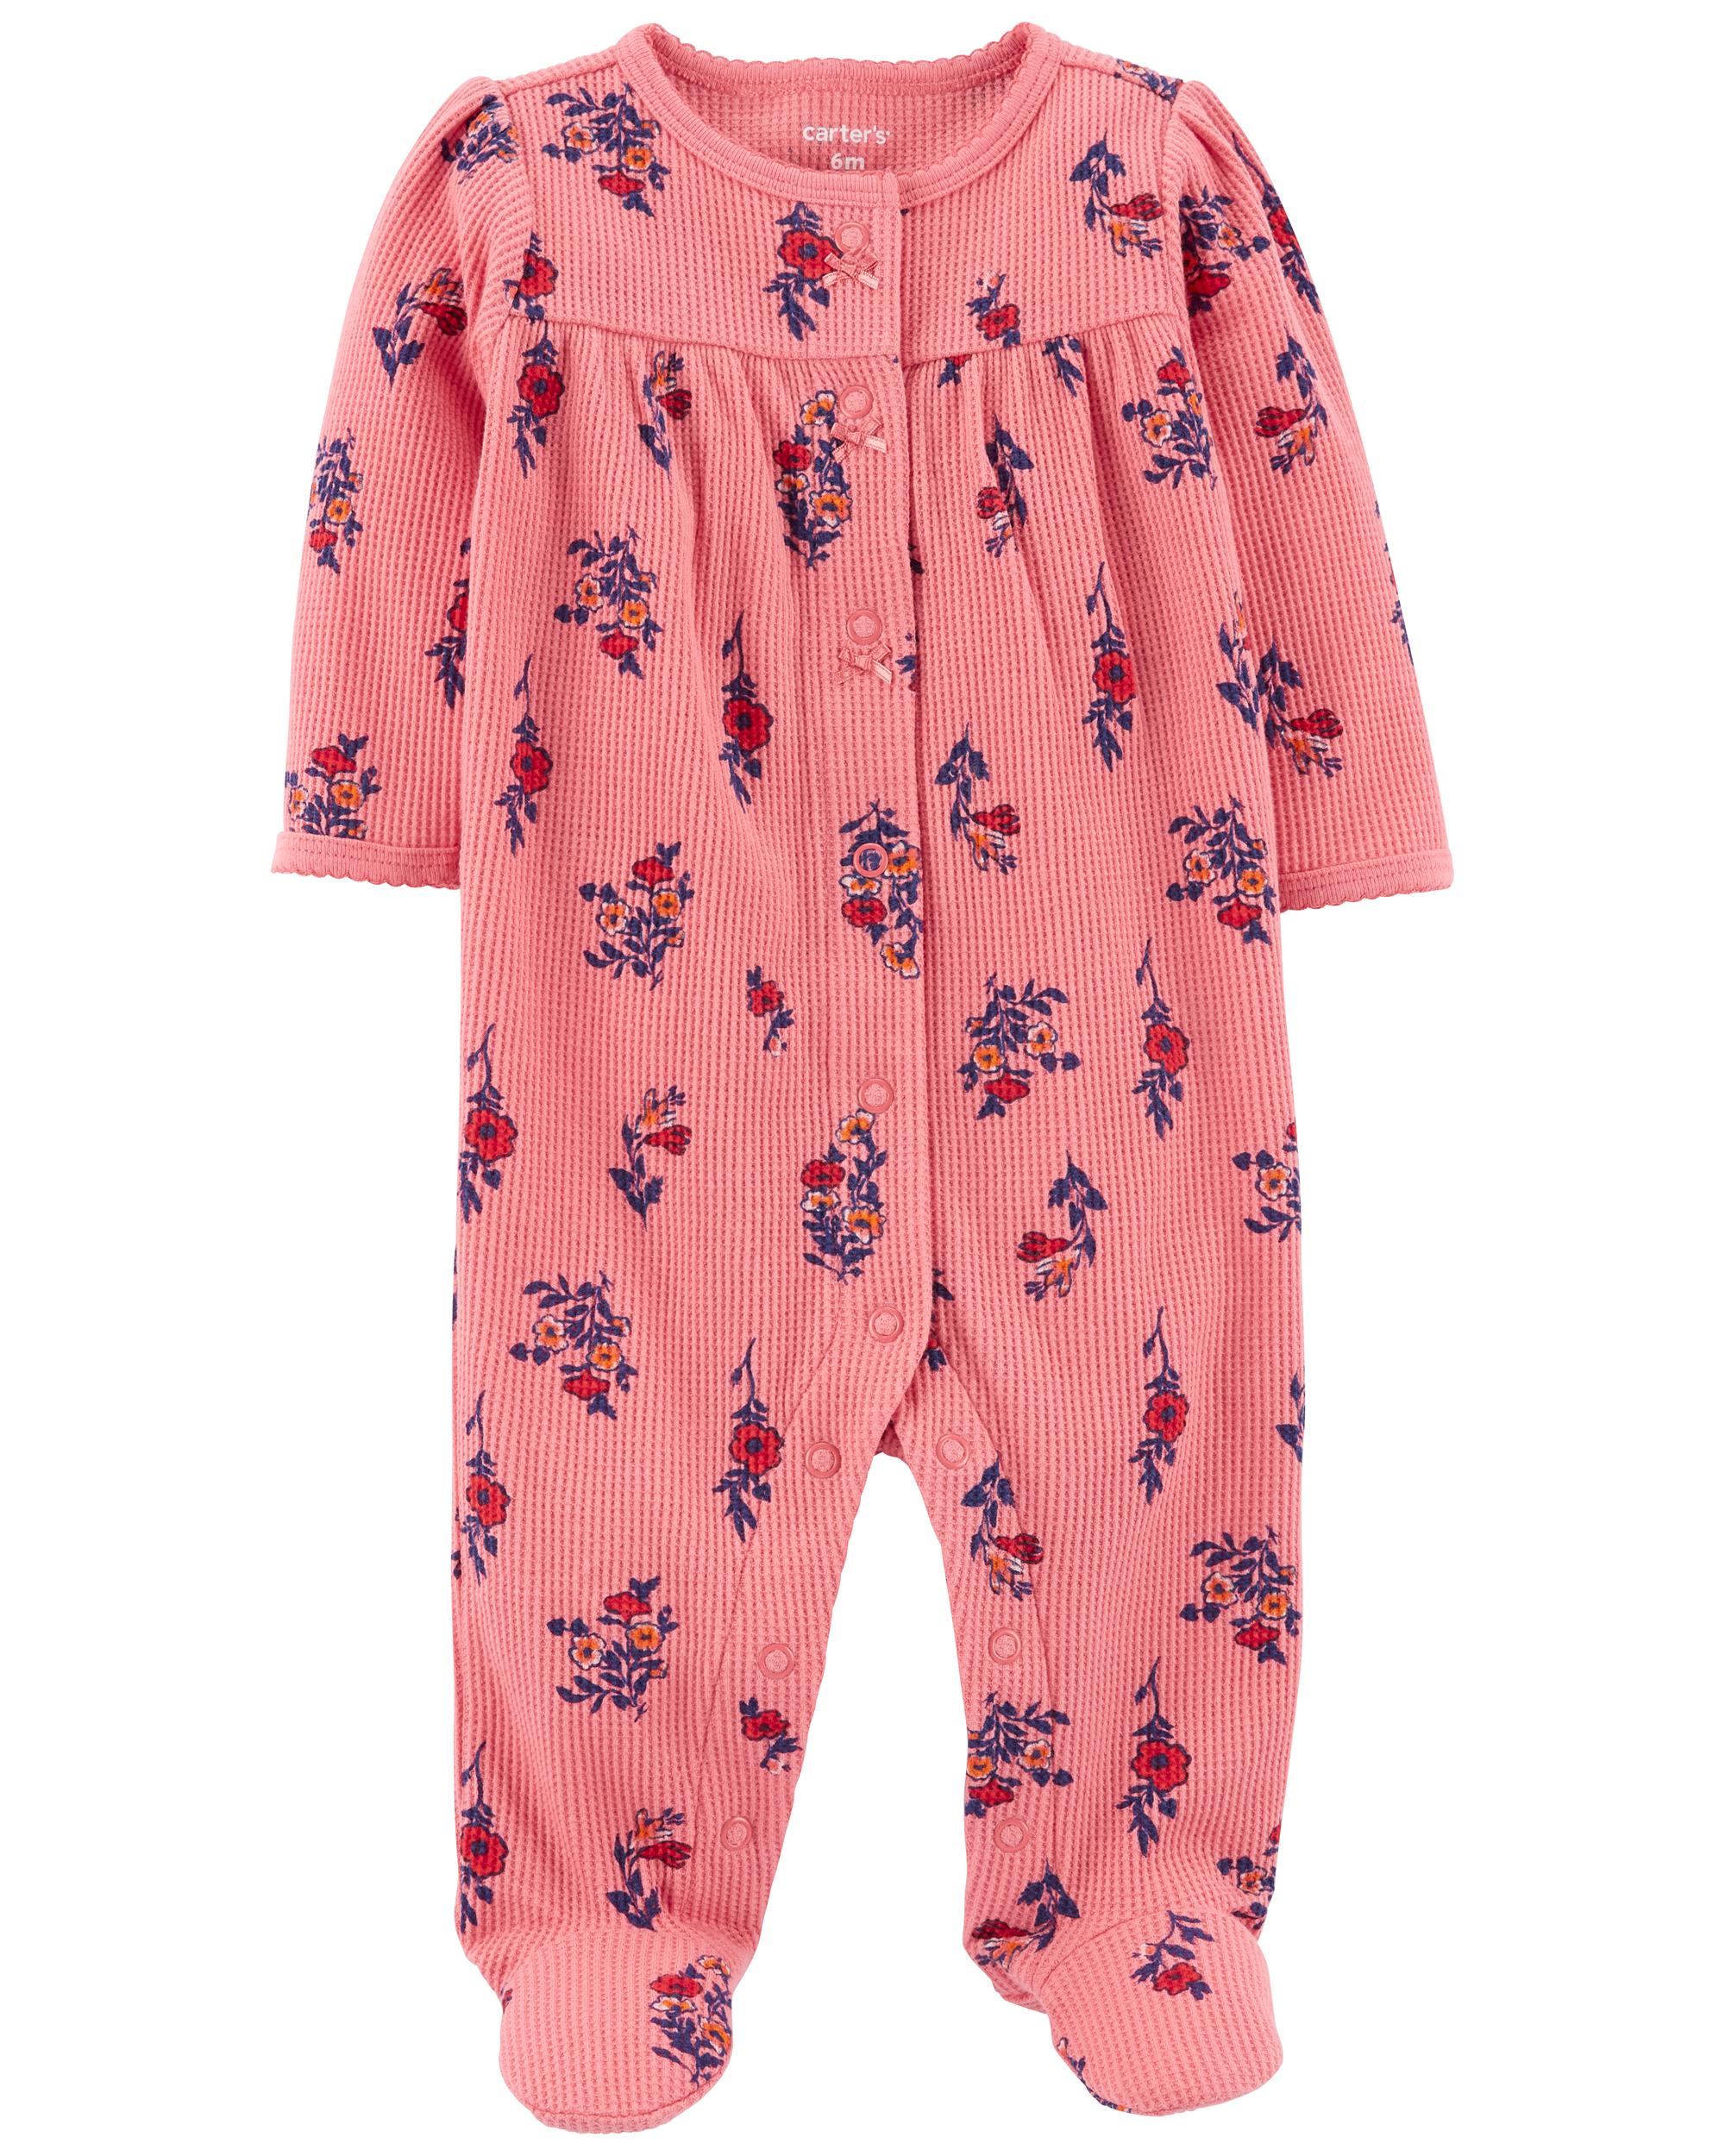 Floral Snap Up Sleeper Pyjamas